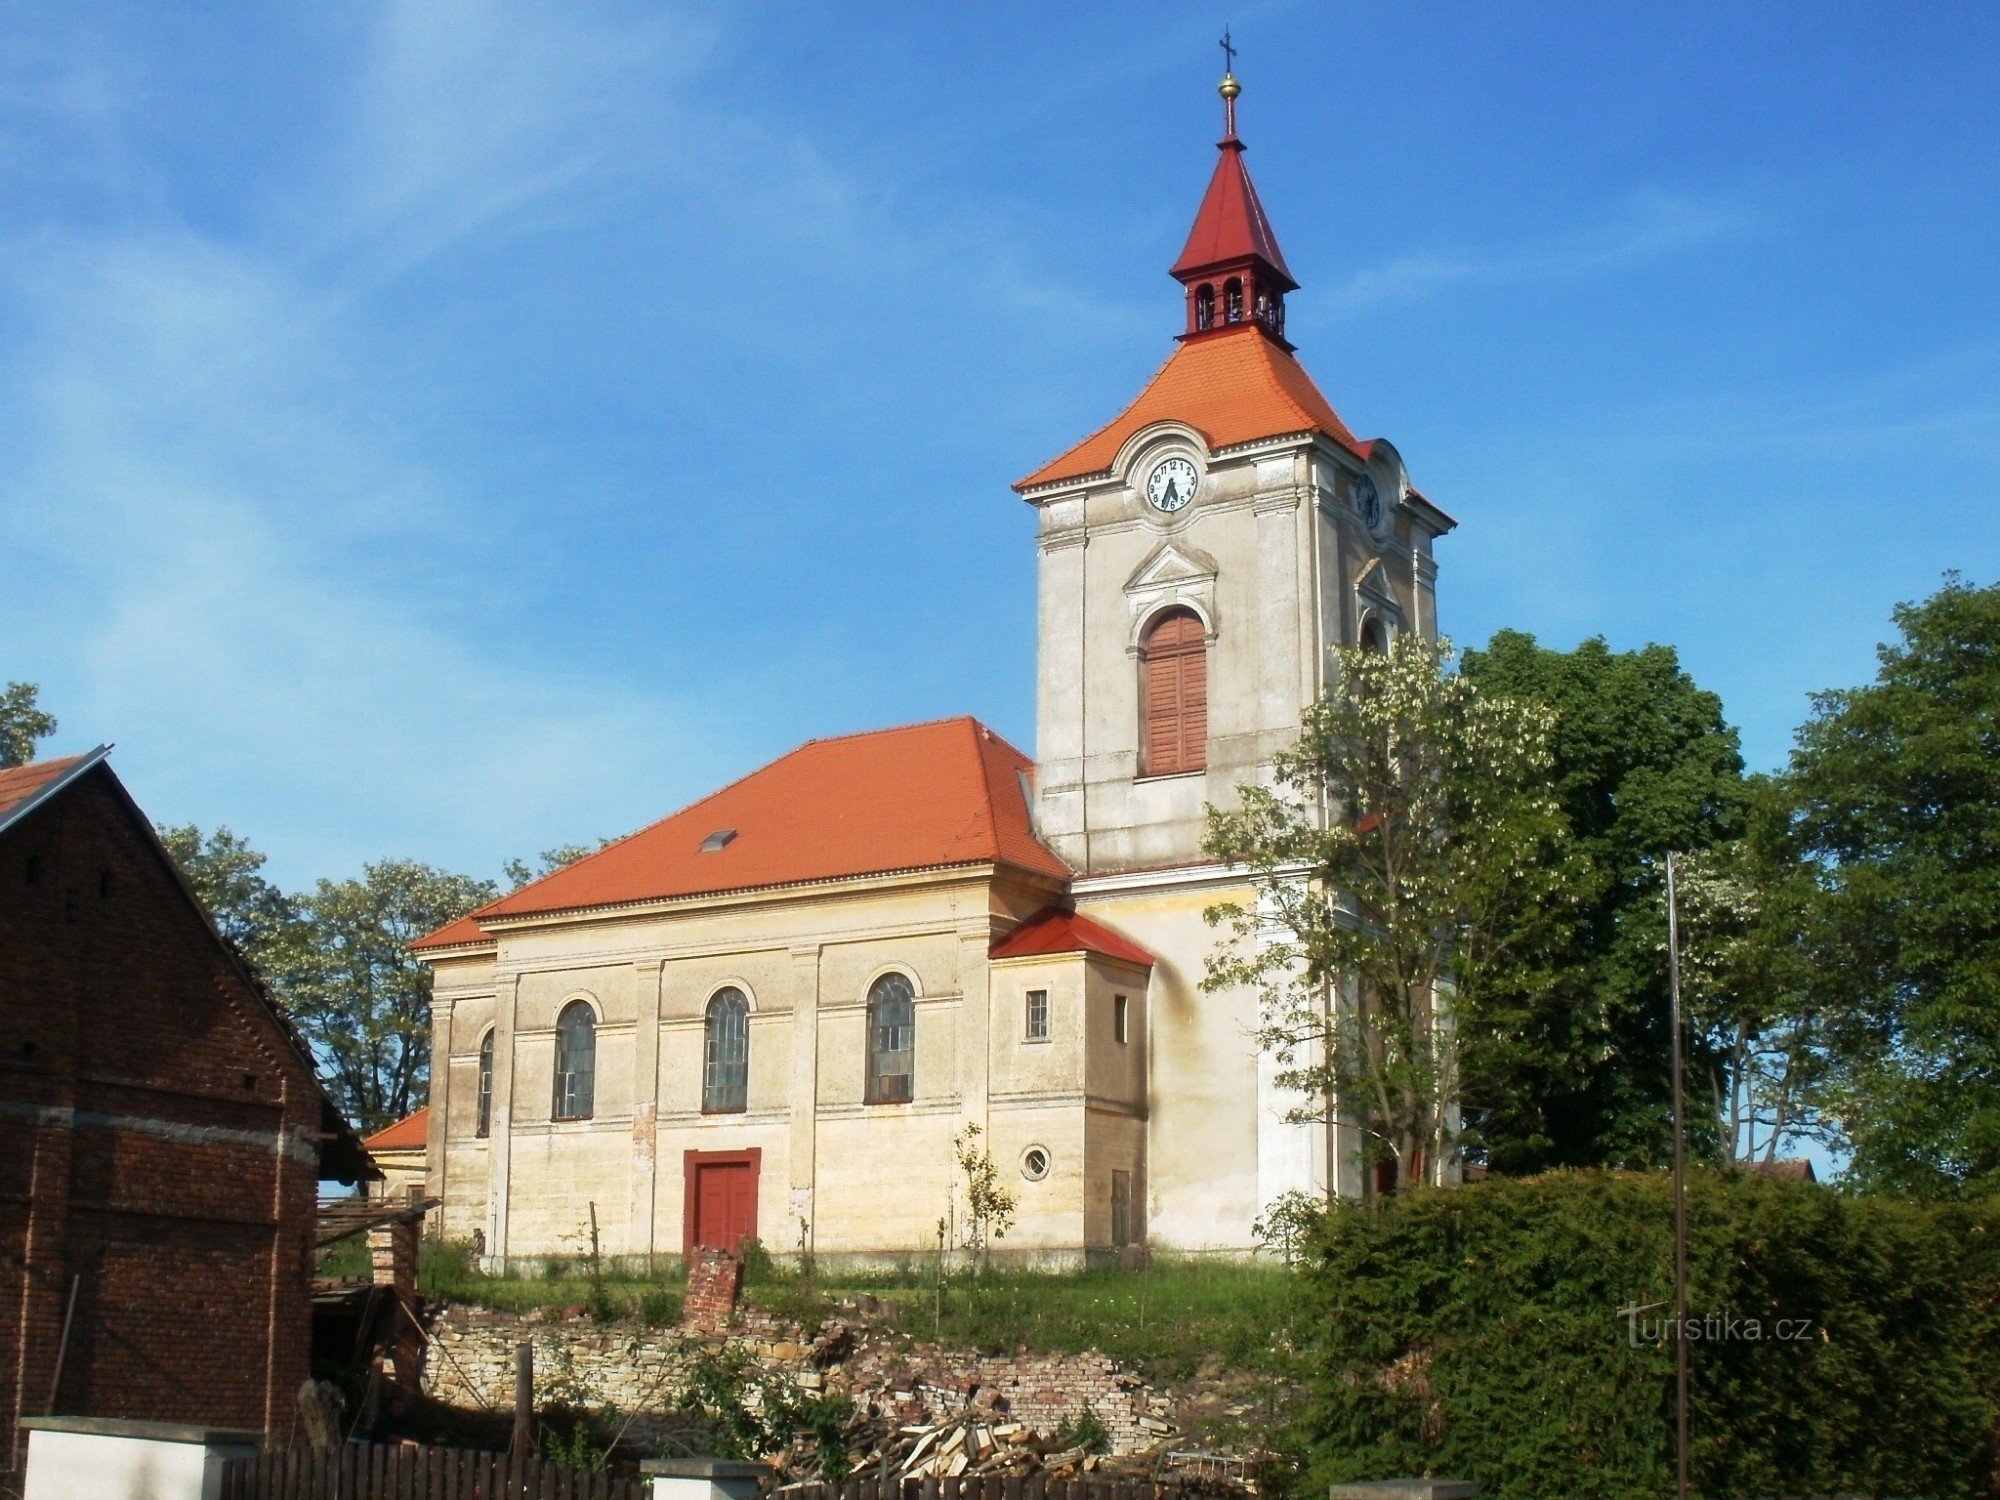 Jenikovice - église de St. Pierre et Paul